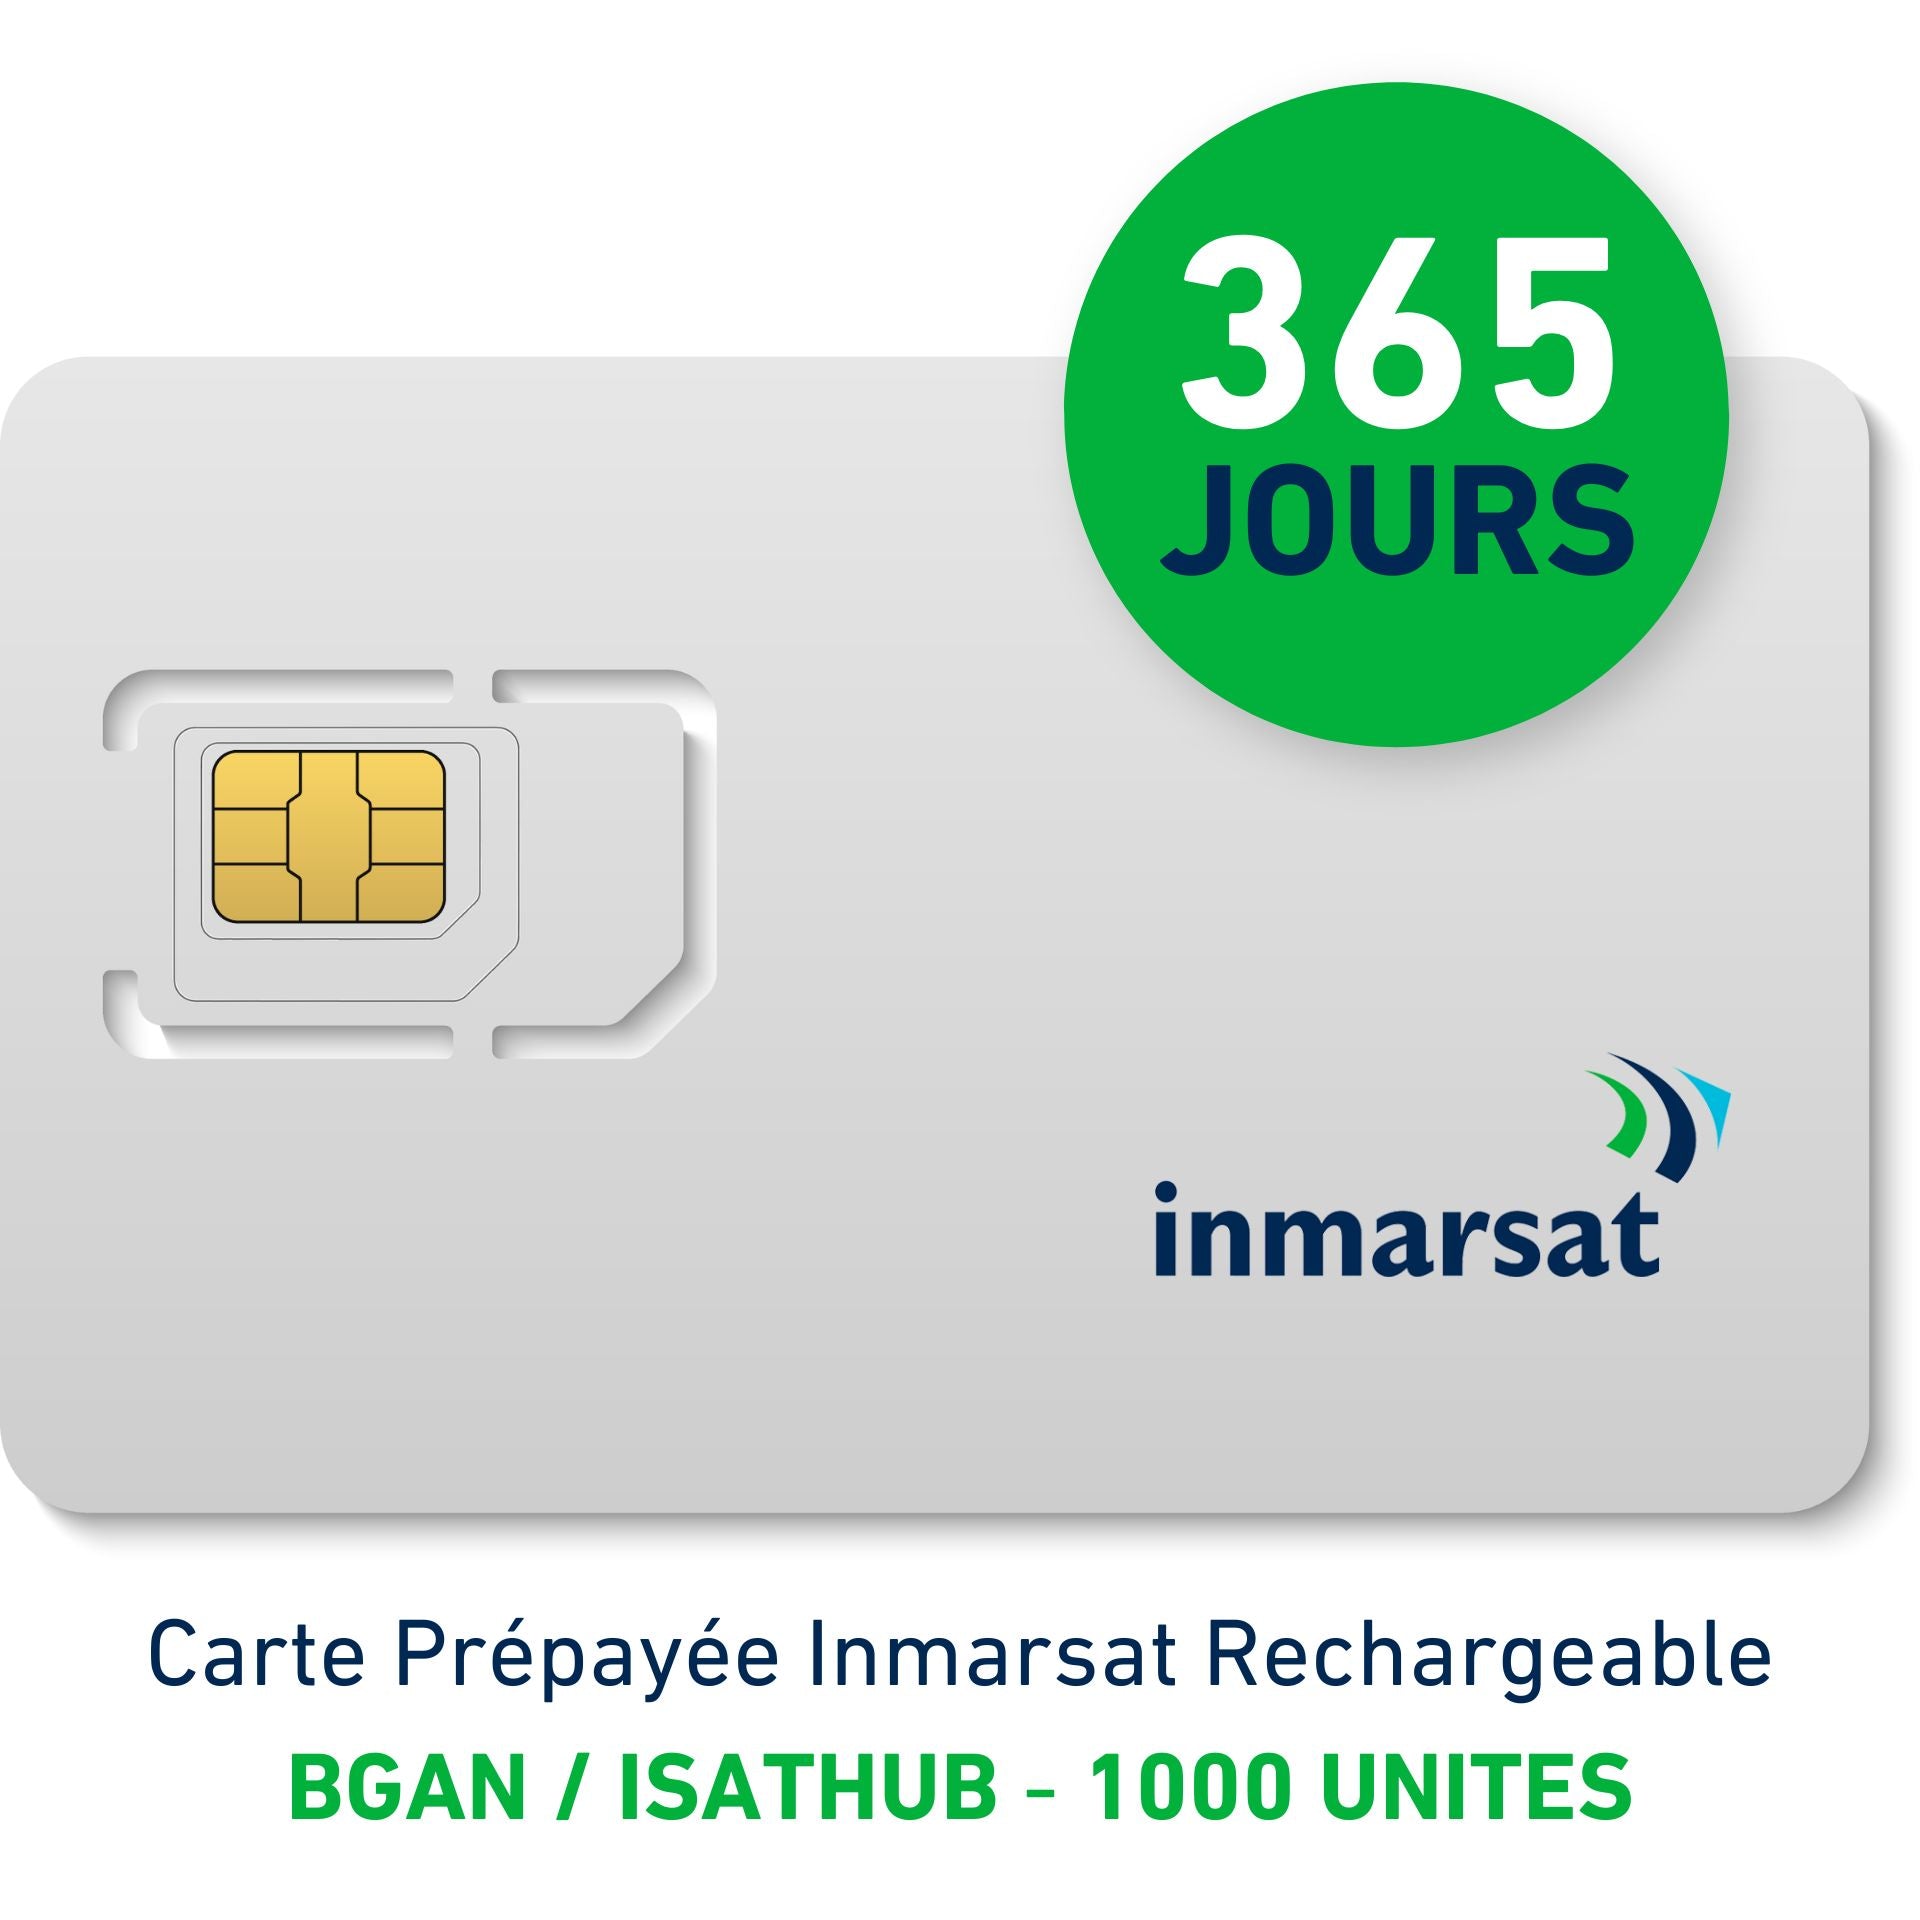 INMARSAT Rechargeable BGAN/IsatHub Prepaid Card - 1000 UNITS - 365 DAYS